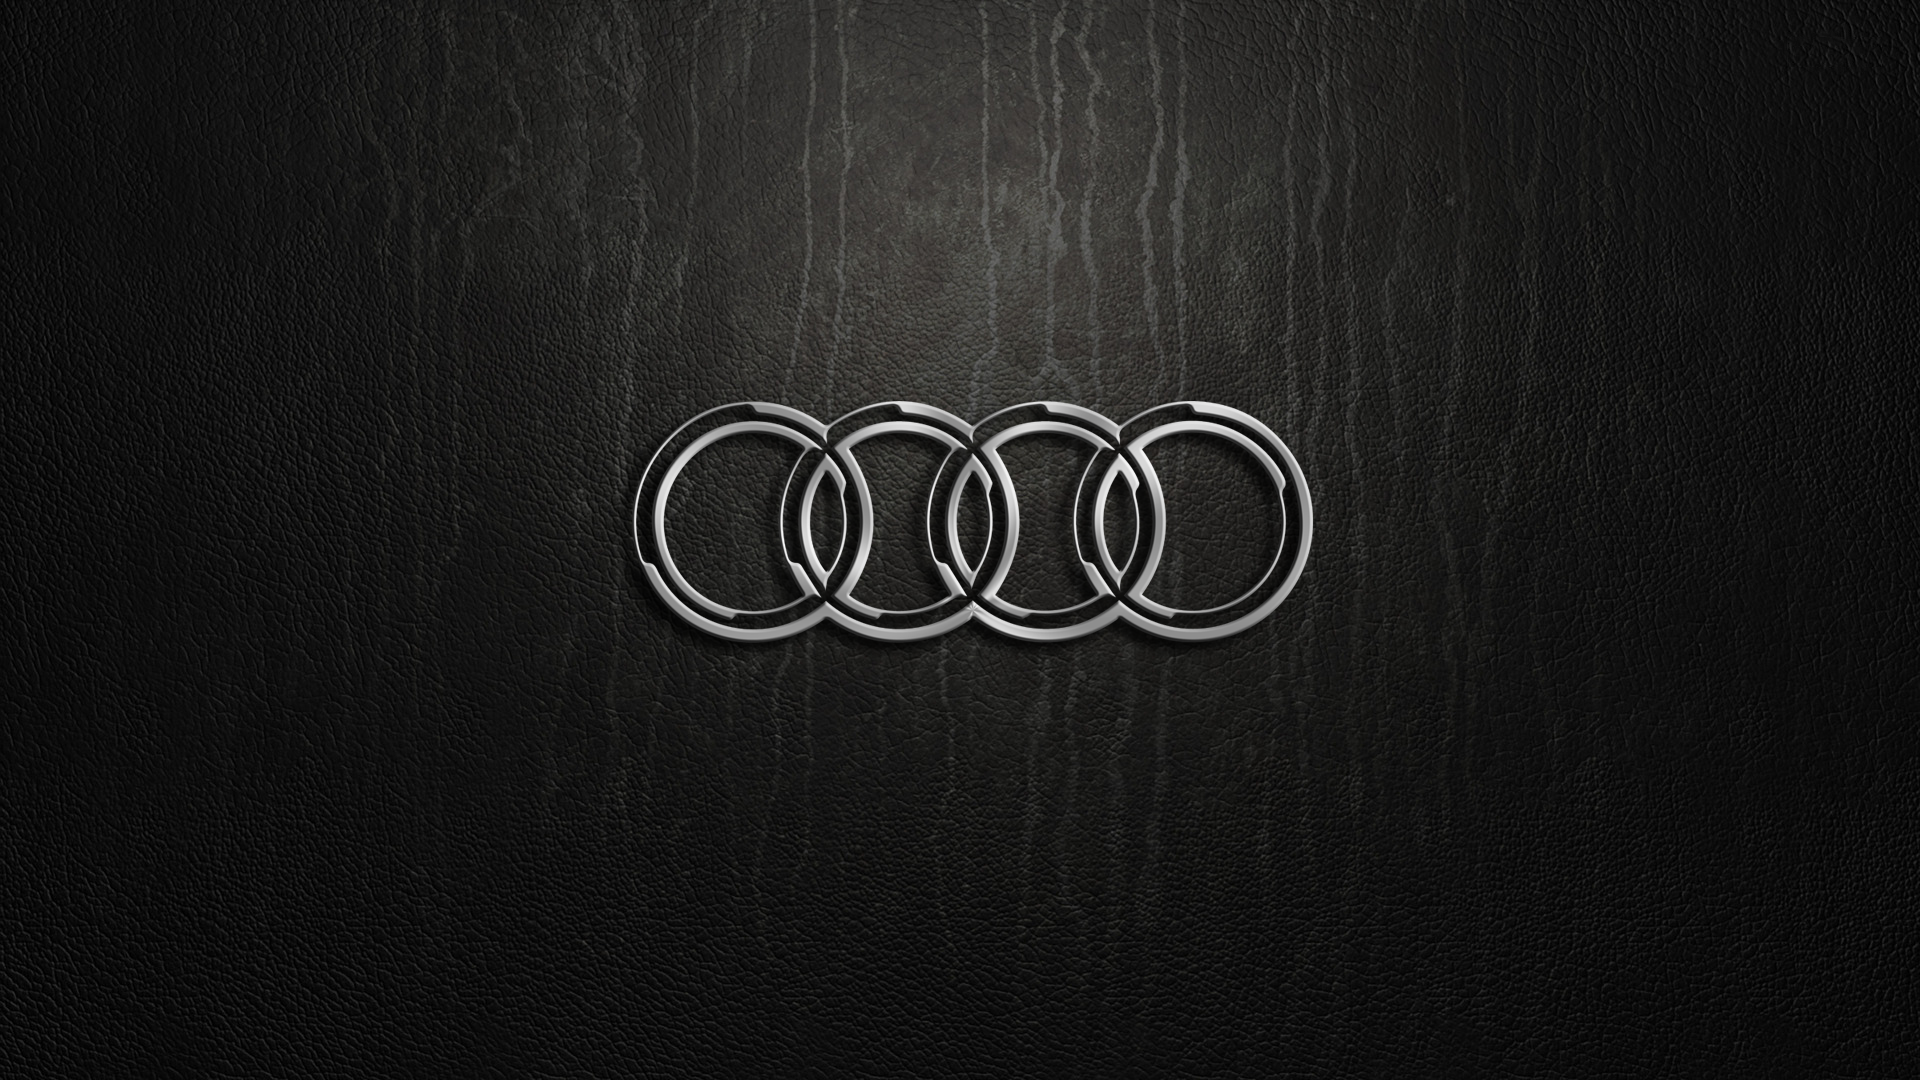 Audi Hd Wallpapers